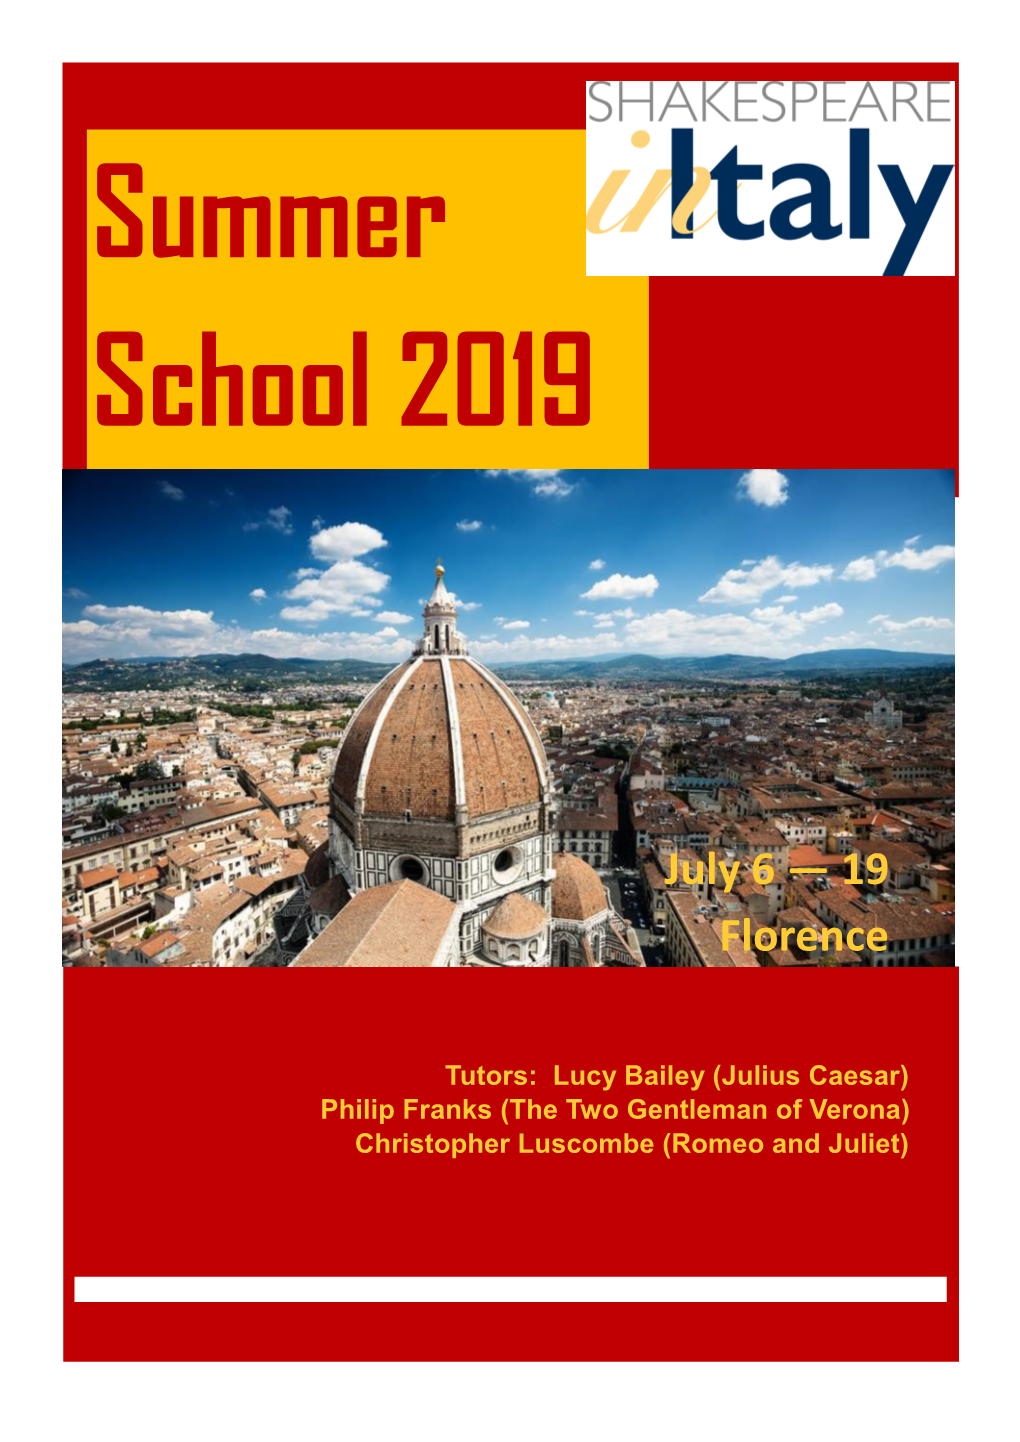 Shakespeare in Italy Students Summer School 2019